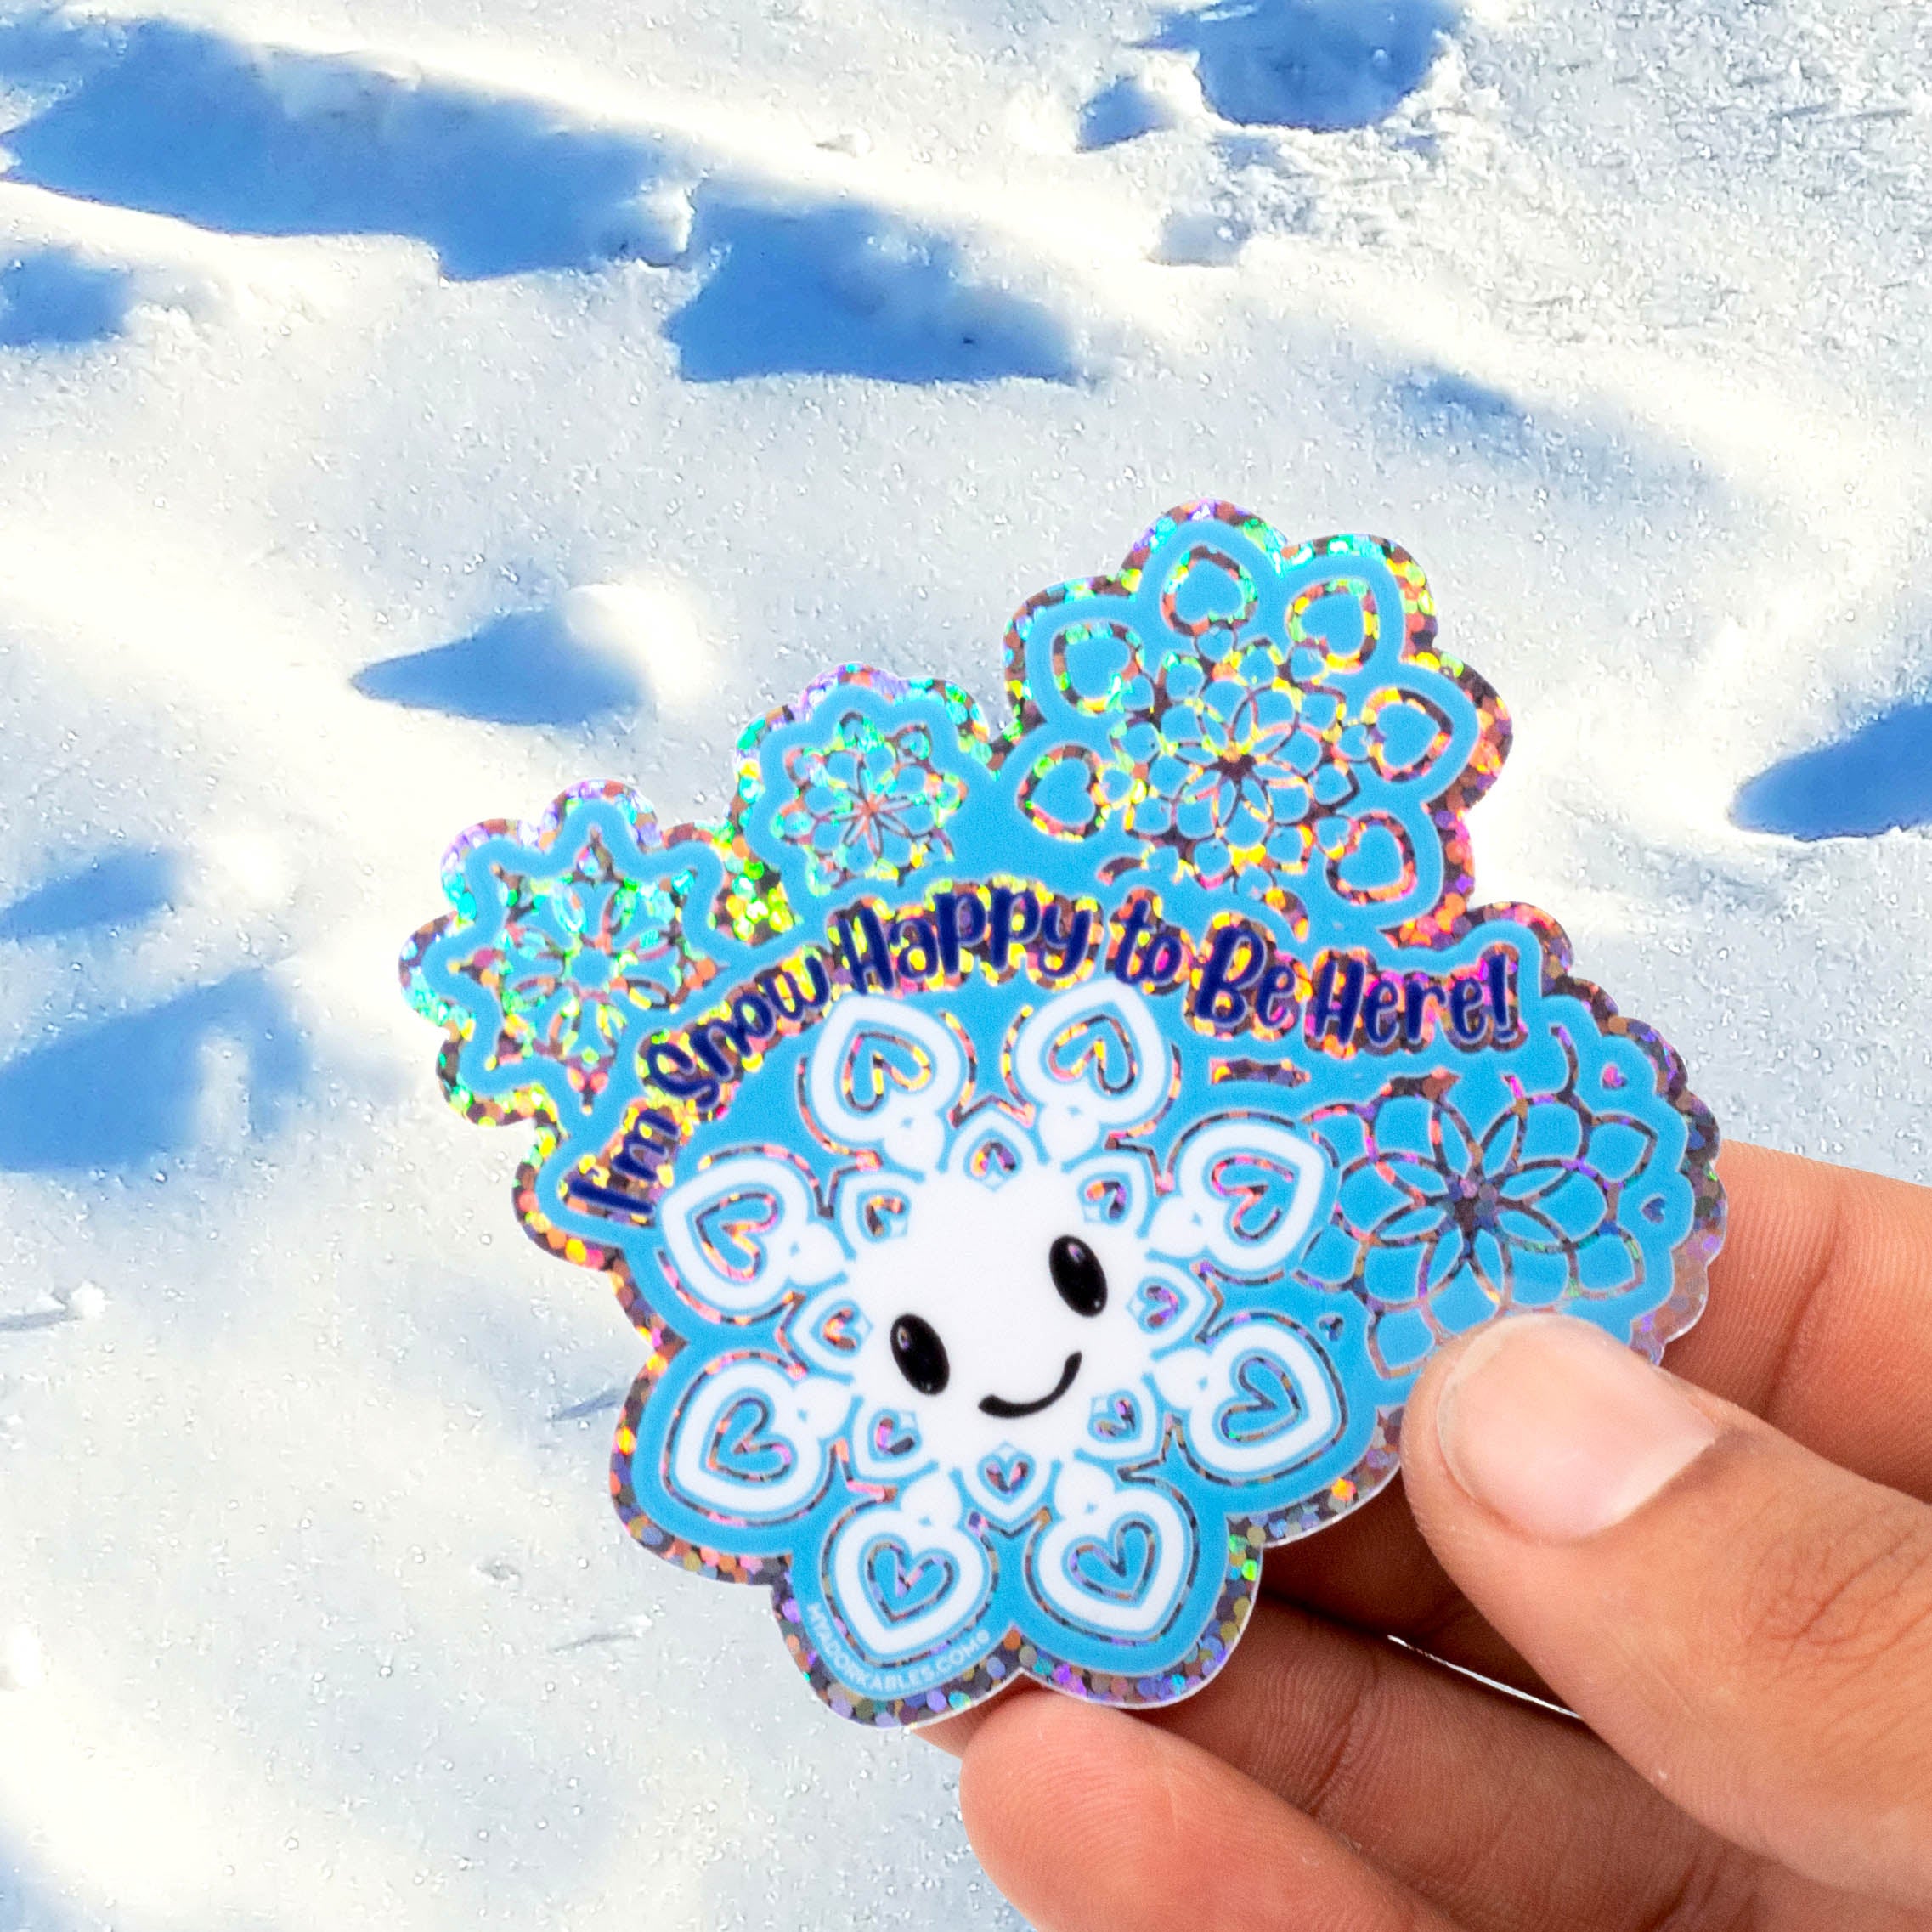 Festive snow snicker - glitter holographic sticker